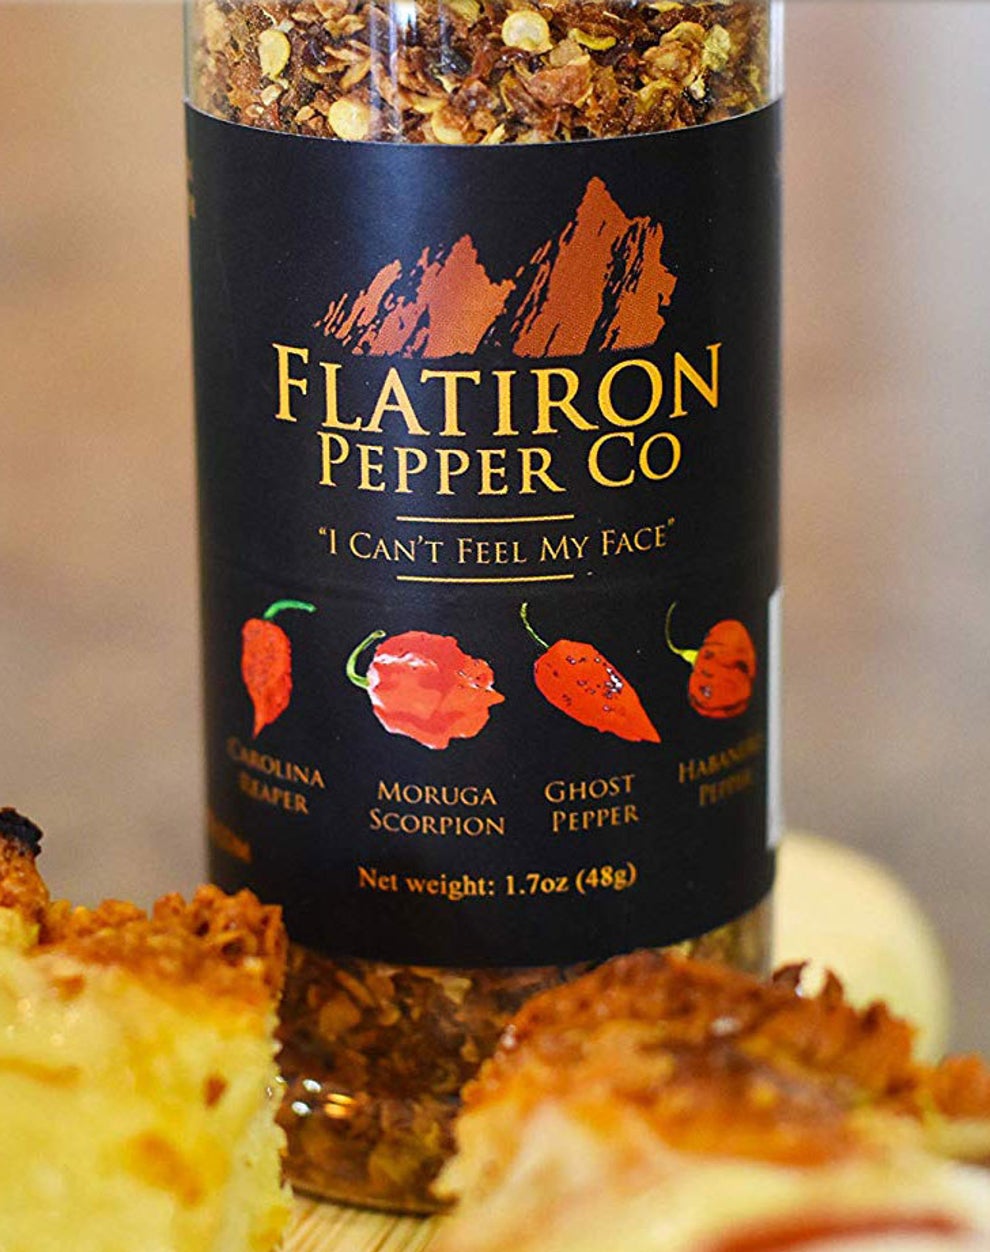 Flatiron Pepper Co - 3 Pack Gift Set